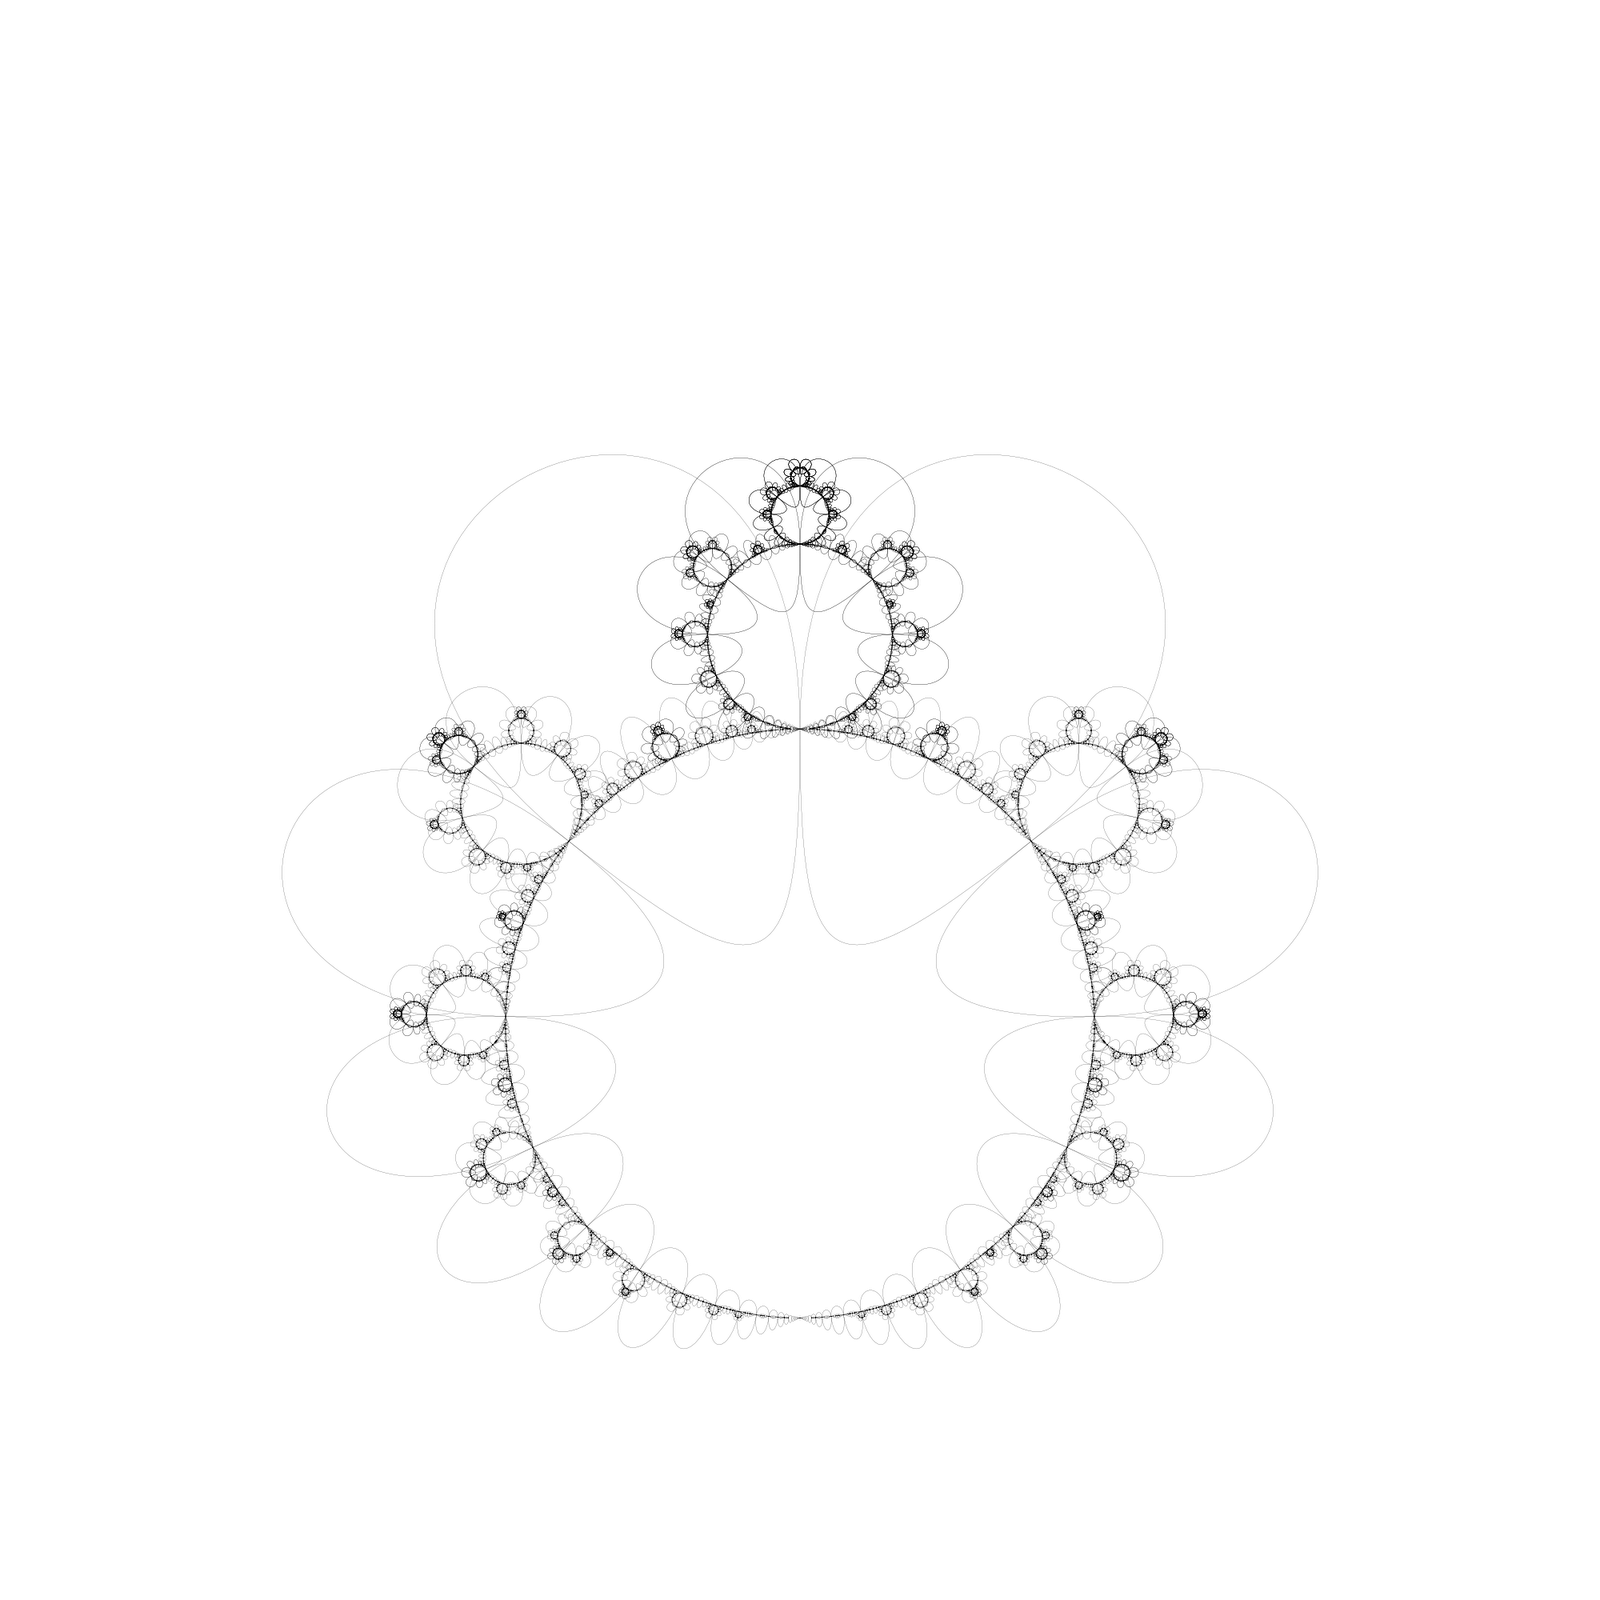 [mandelcircle.2.png]